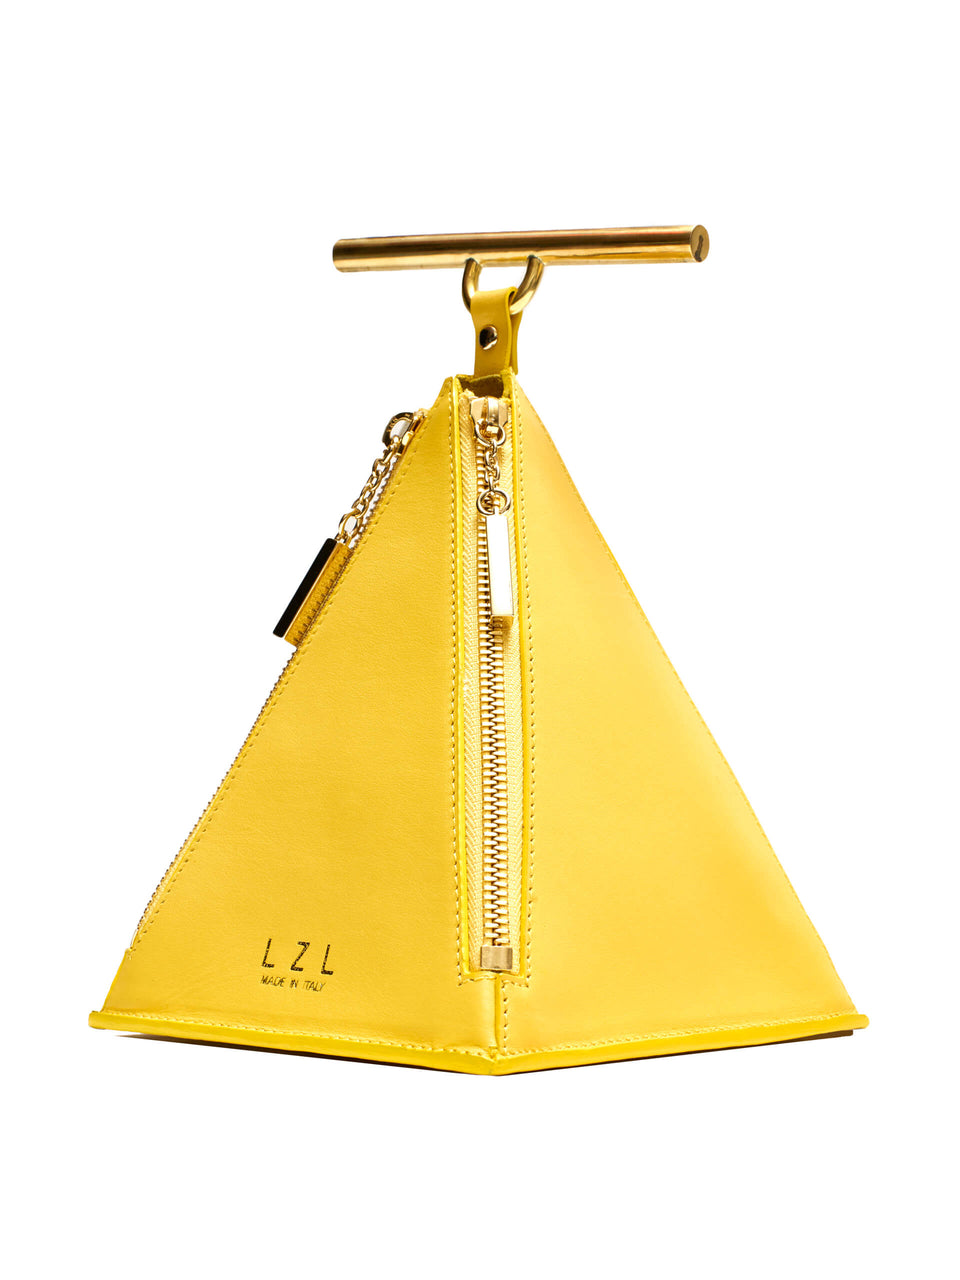 LZL Pyramid Bag 002 Yellow - Side